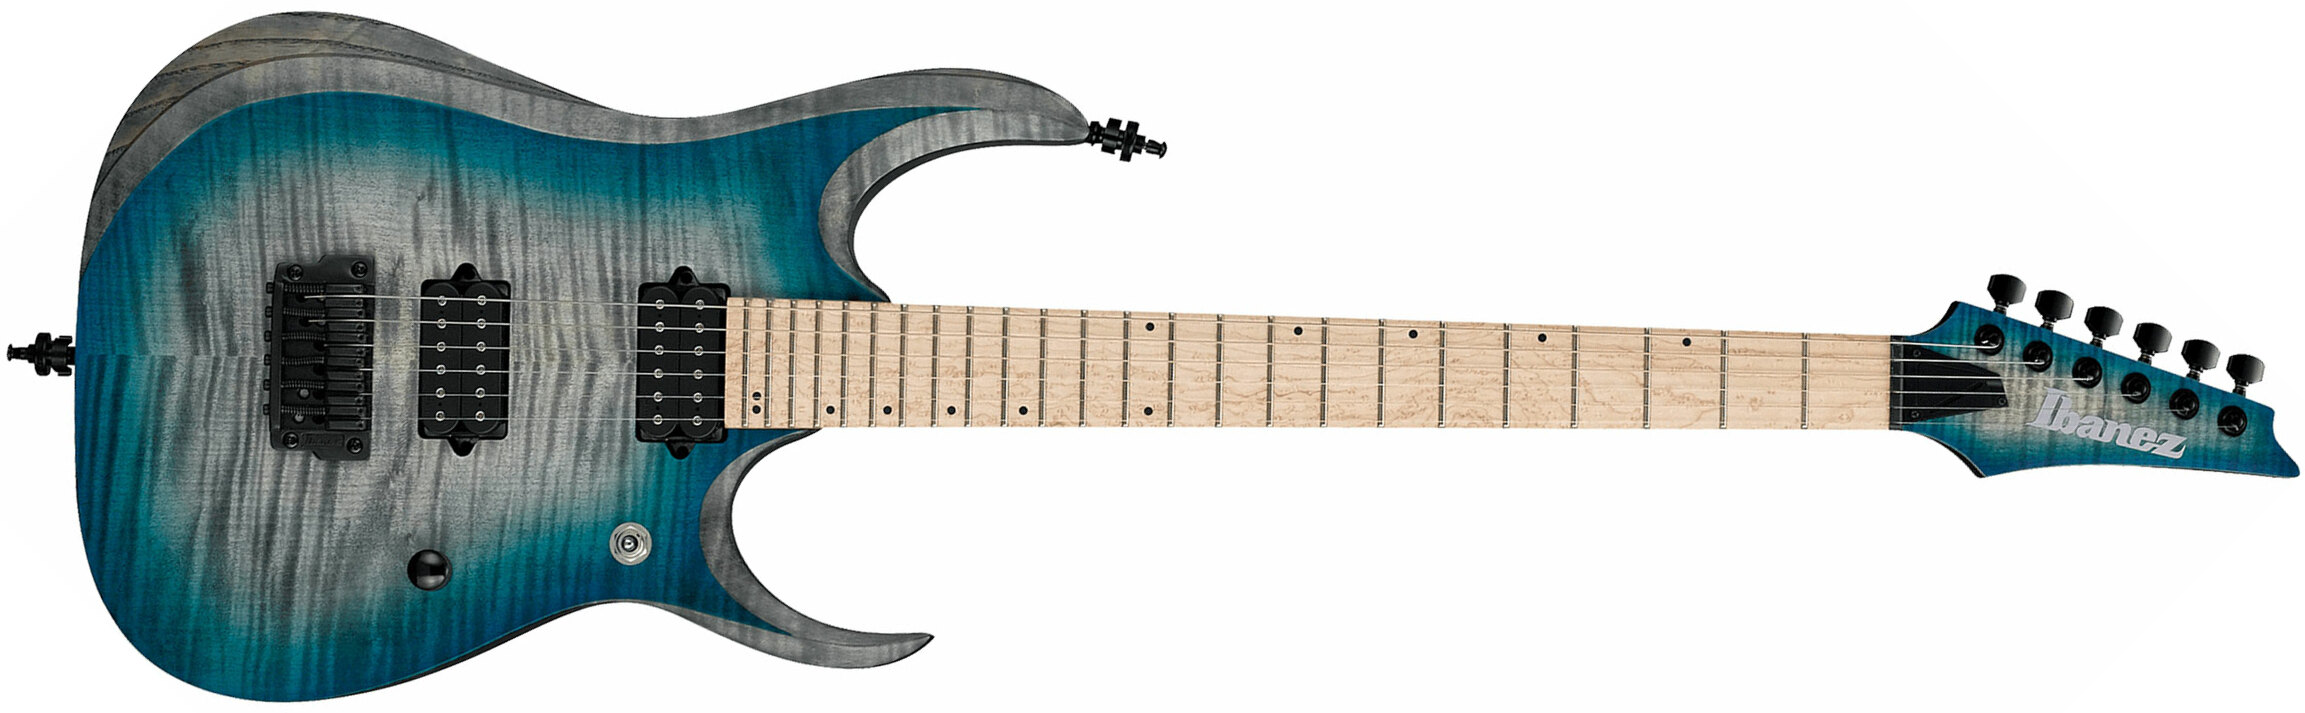 Ibanez Rgd61al Ssb Axion Label Hh Dimarzio Ht Mn - Stained Sapphire Blue Burst - Double cut electric guitar - Main picture